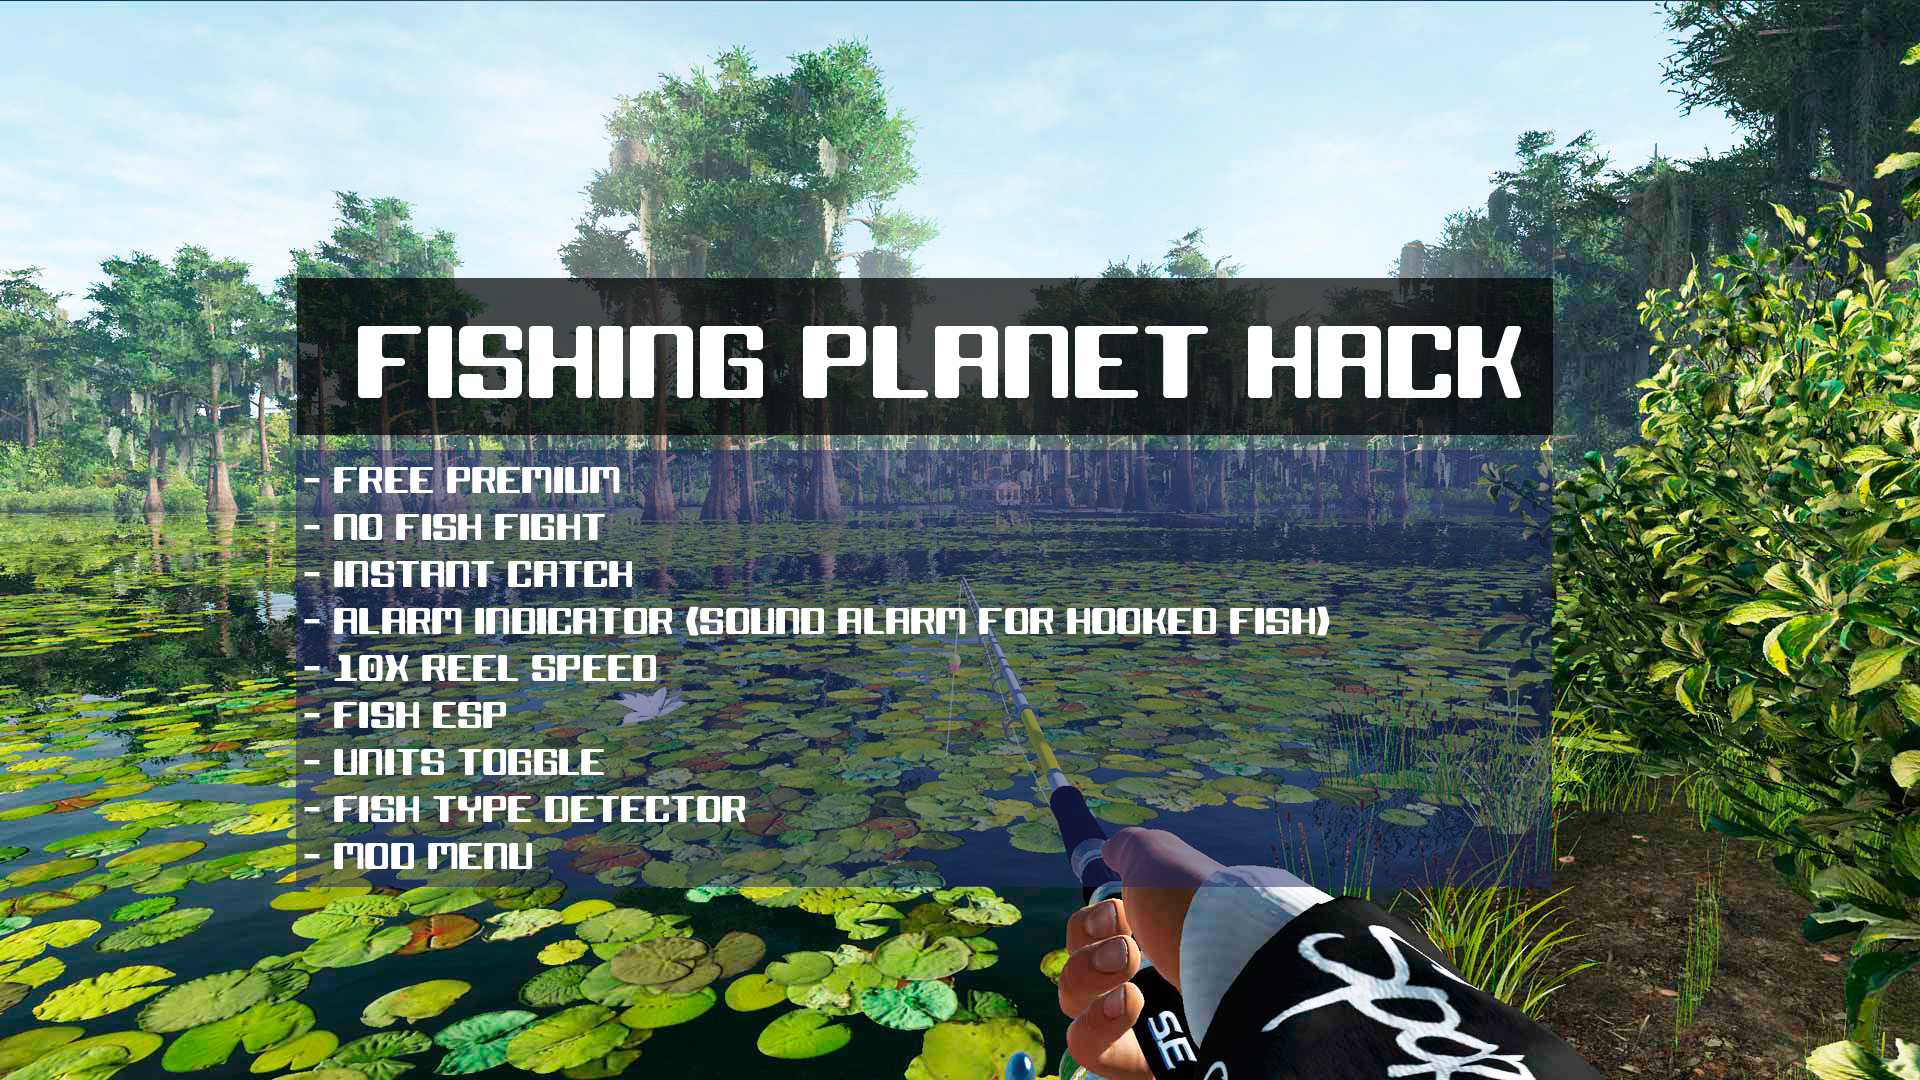 Fishing Planet Cheat - ESP, FishType, Alarm Indicator, Free Premium, Mod Menu